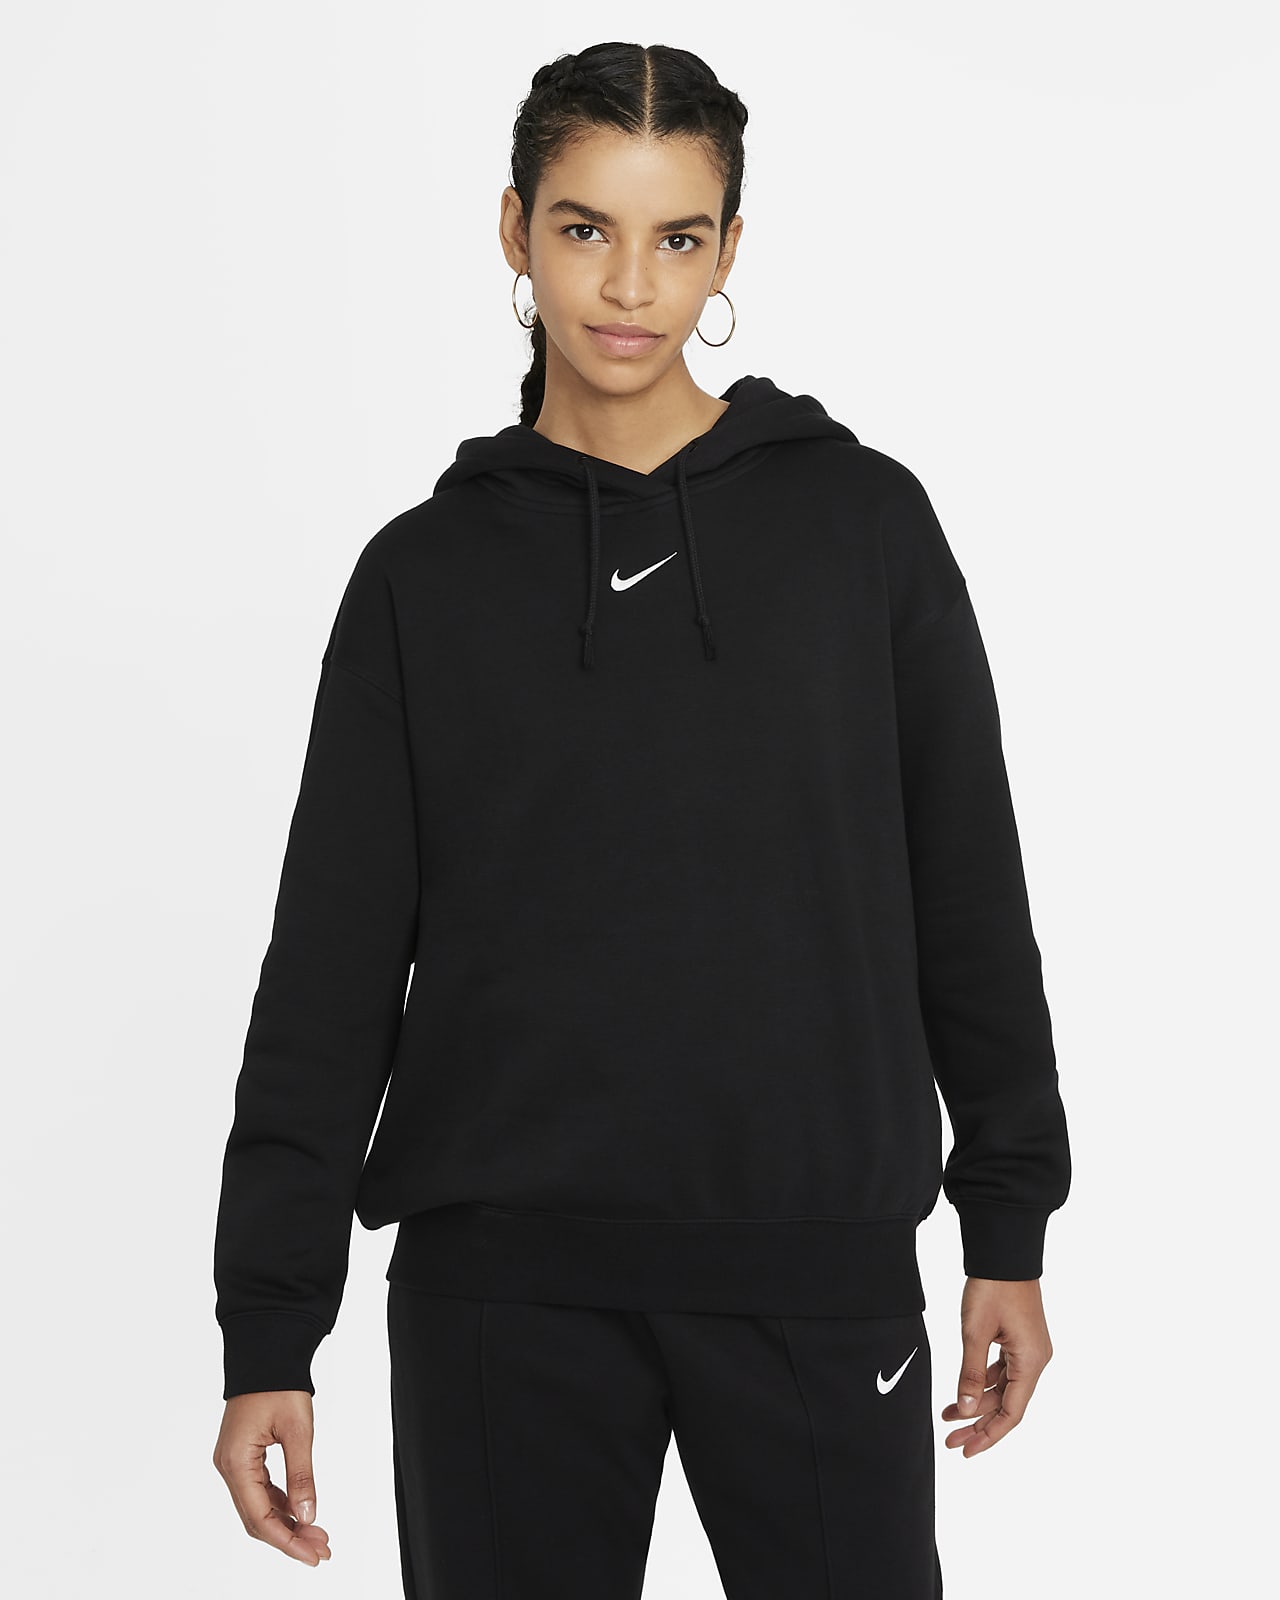 Nike Sportswear Collection Oversized Hoodie.